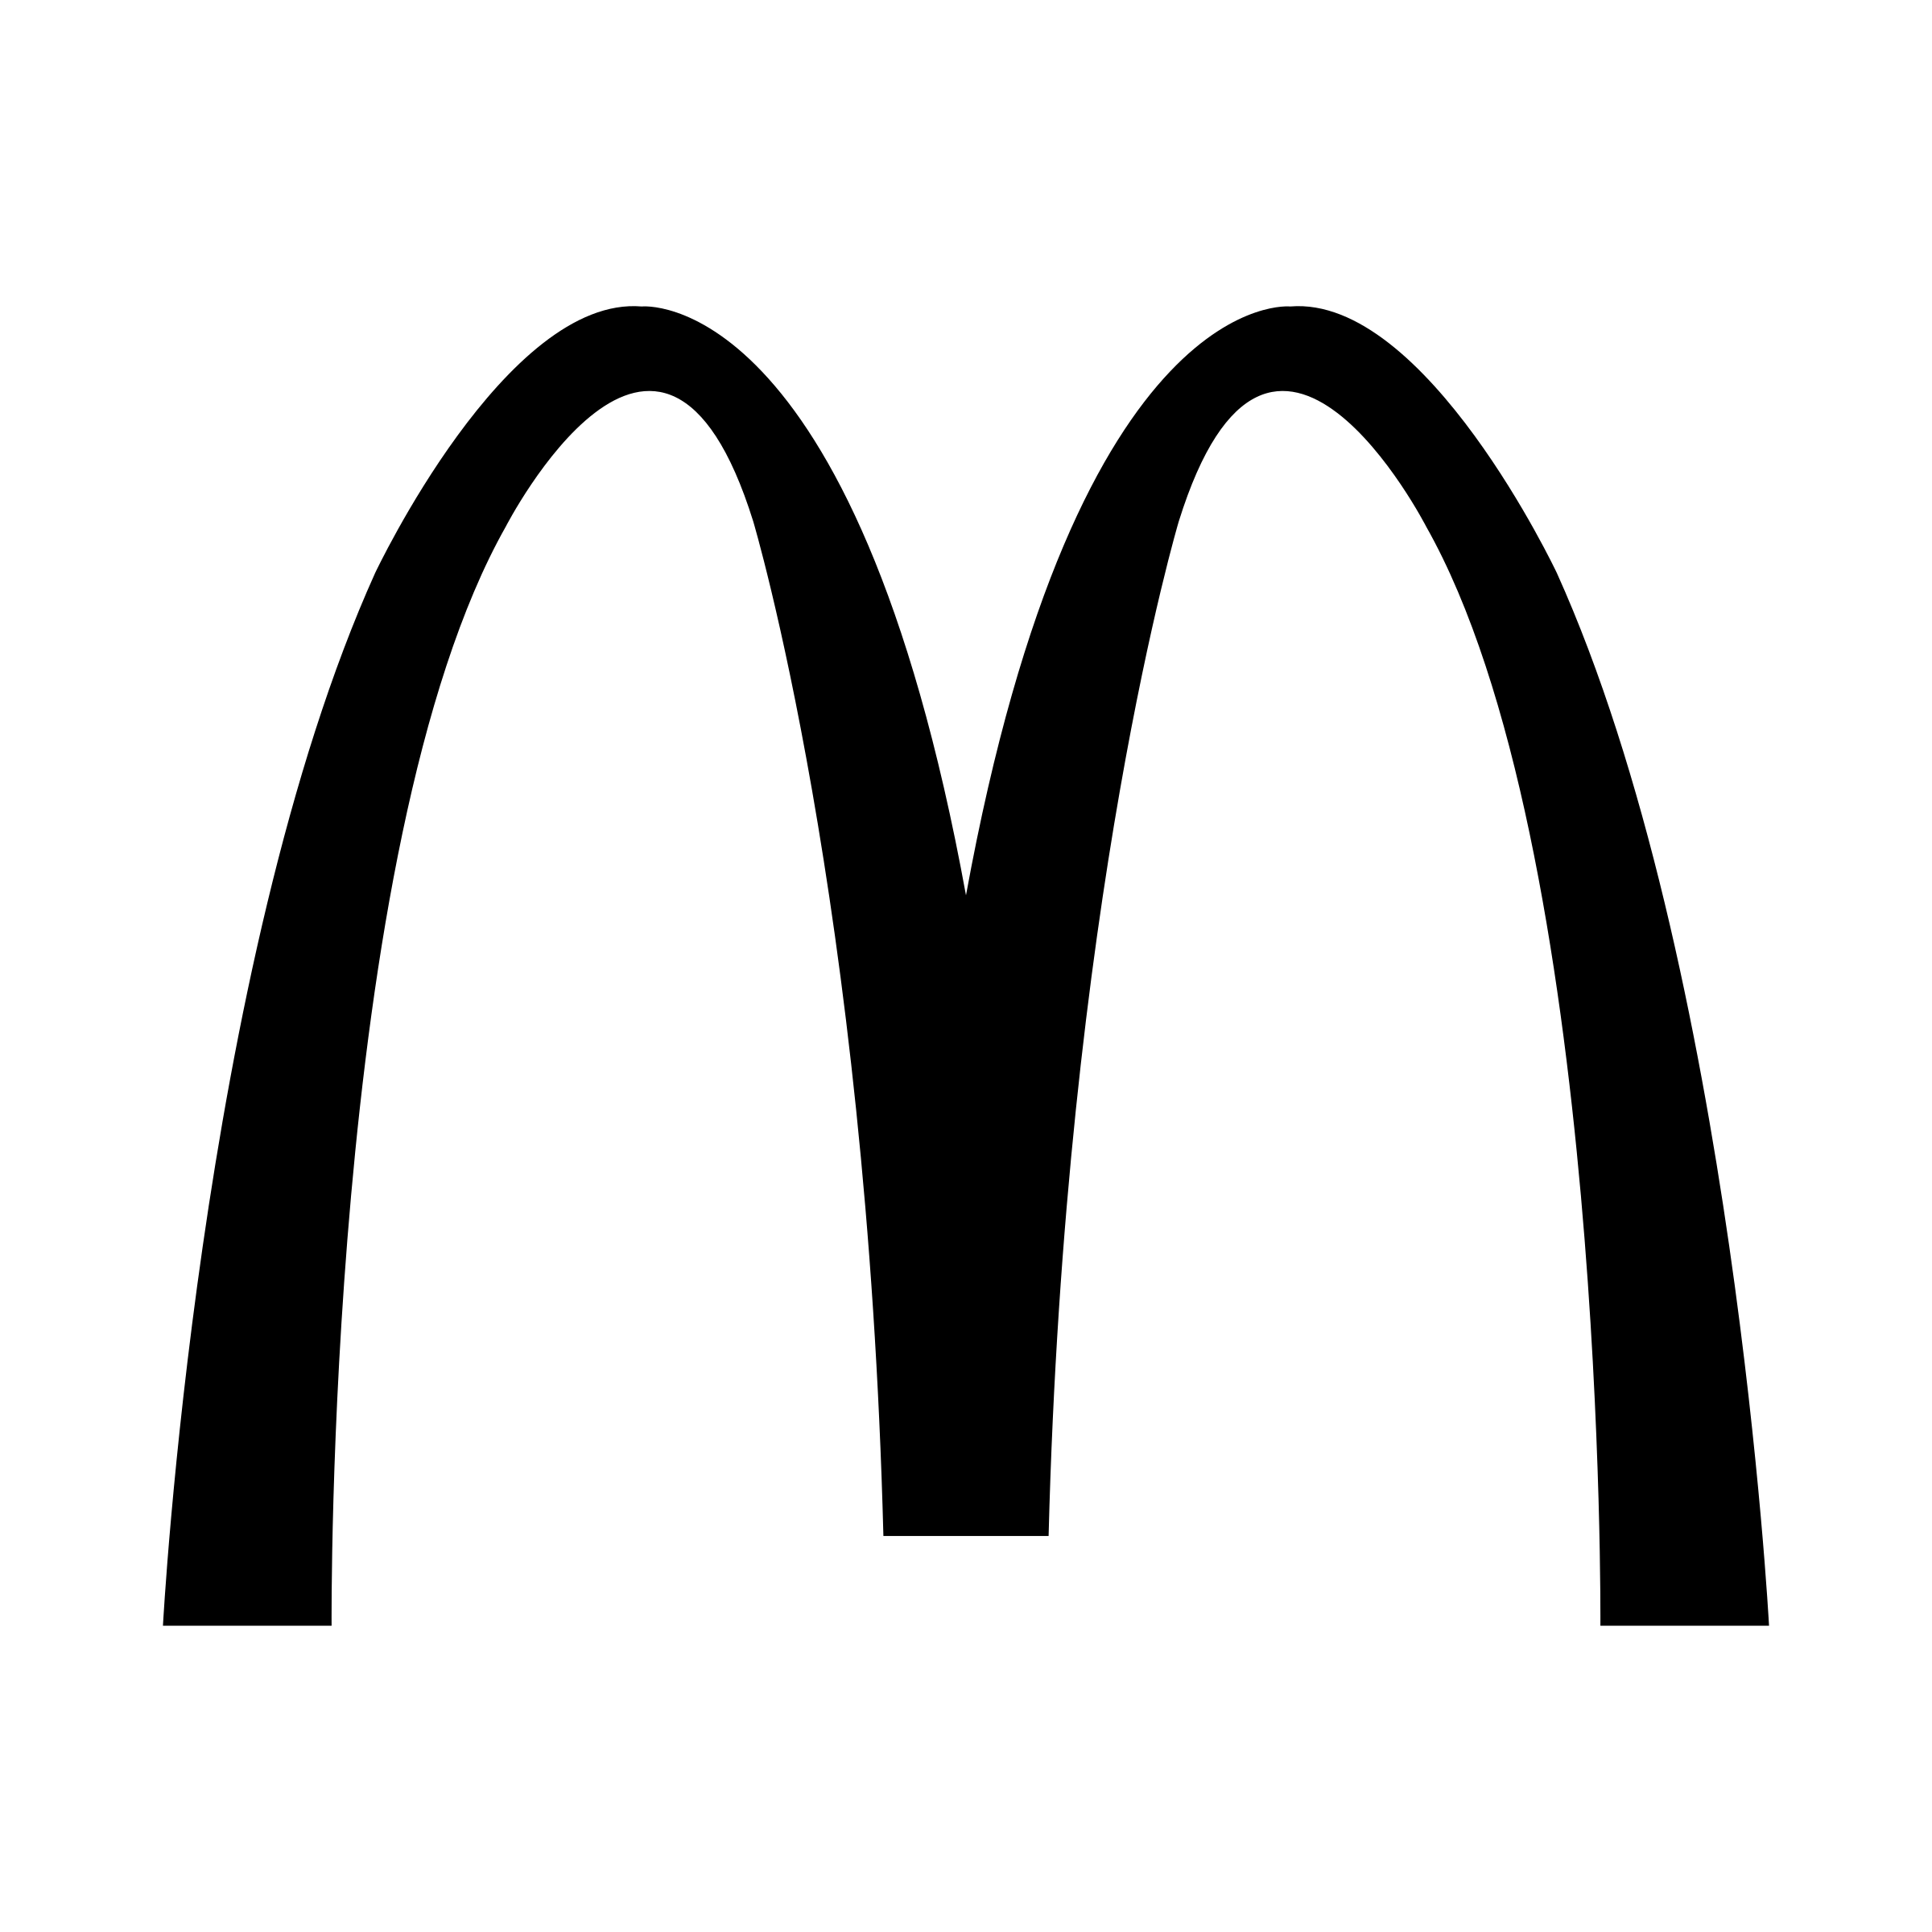 mcdonalds-9-logo-black-and-white.png